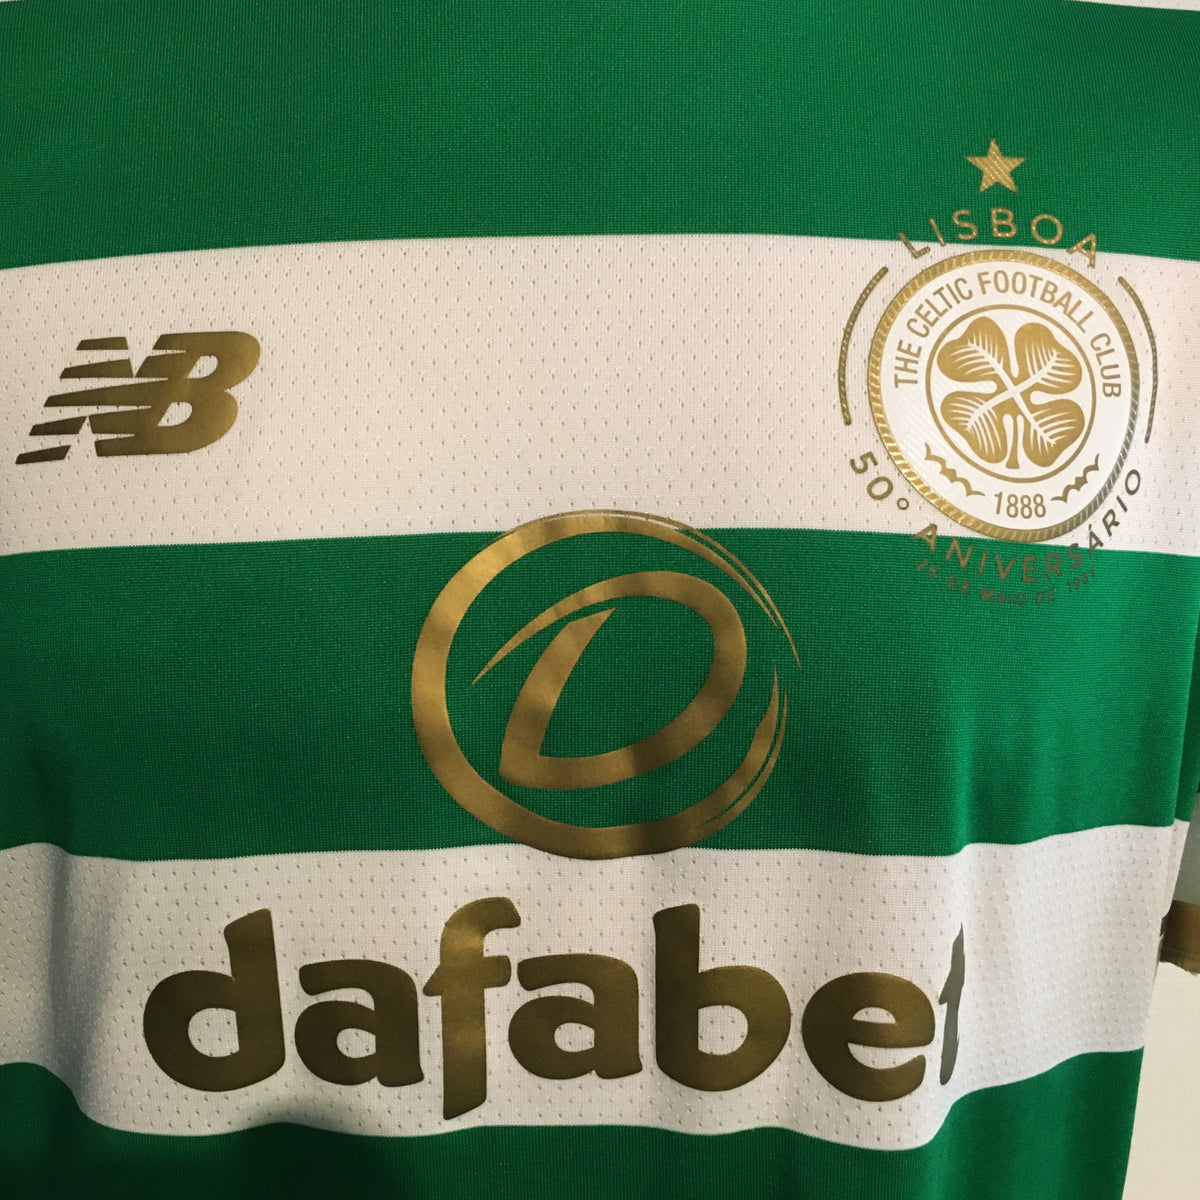 Celtic FC Honor Lisbon Lions with 2017/18 Home Kit - FOOTBALL FASHION